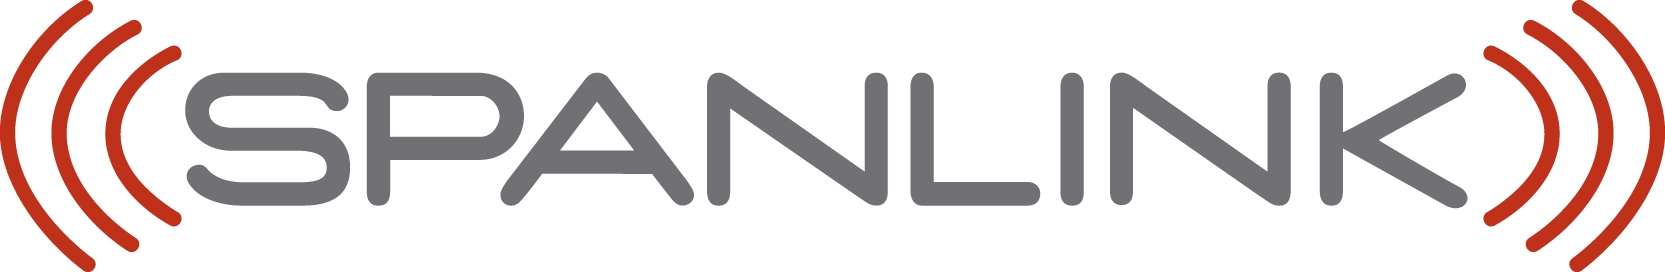 Spanlink Communications Inc logo